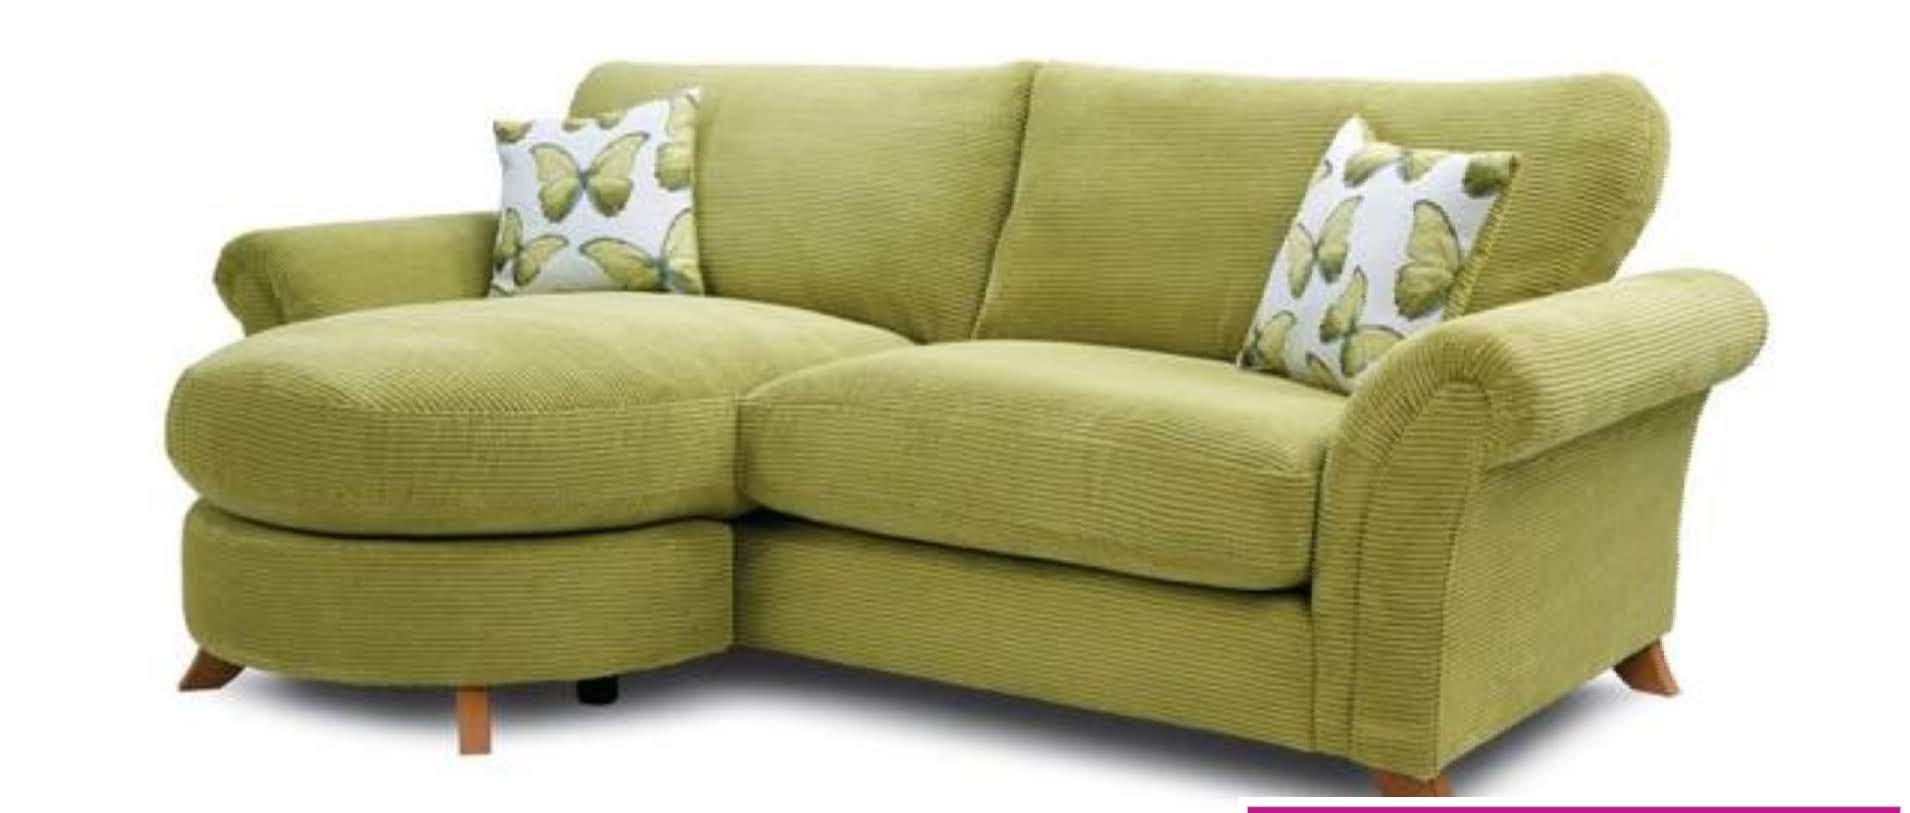 lime green corner sofa bed